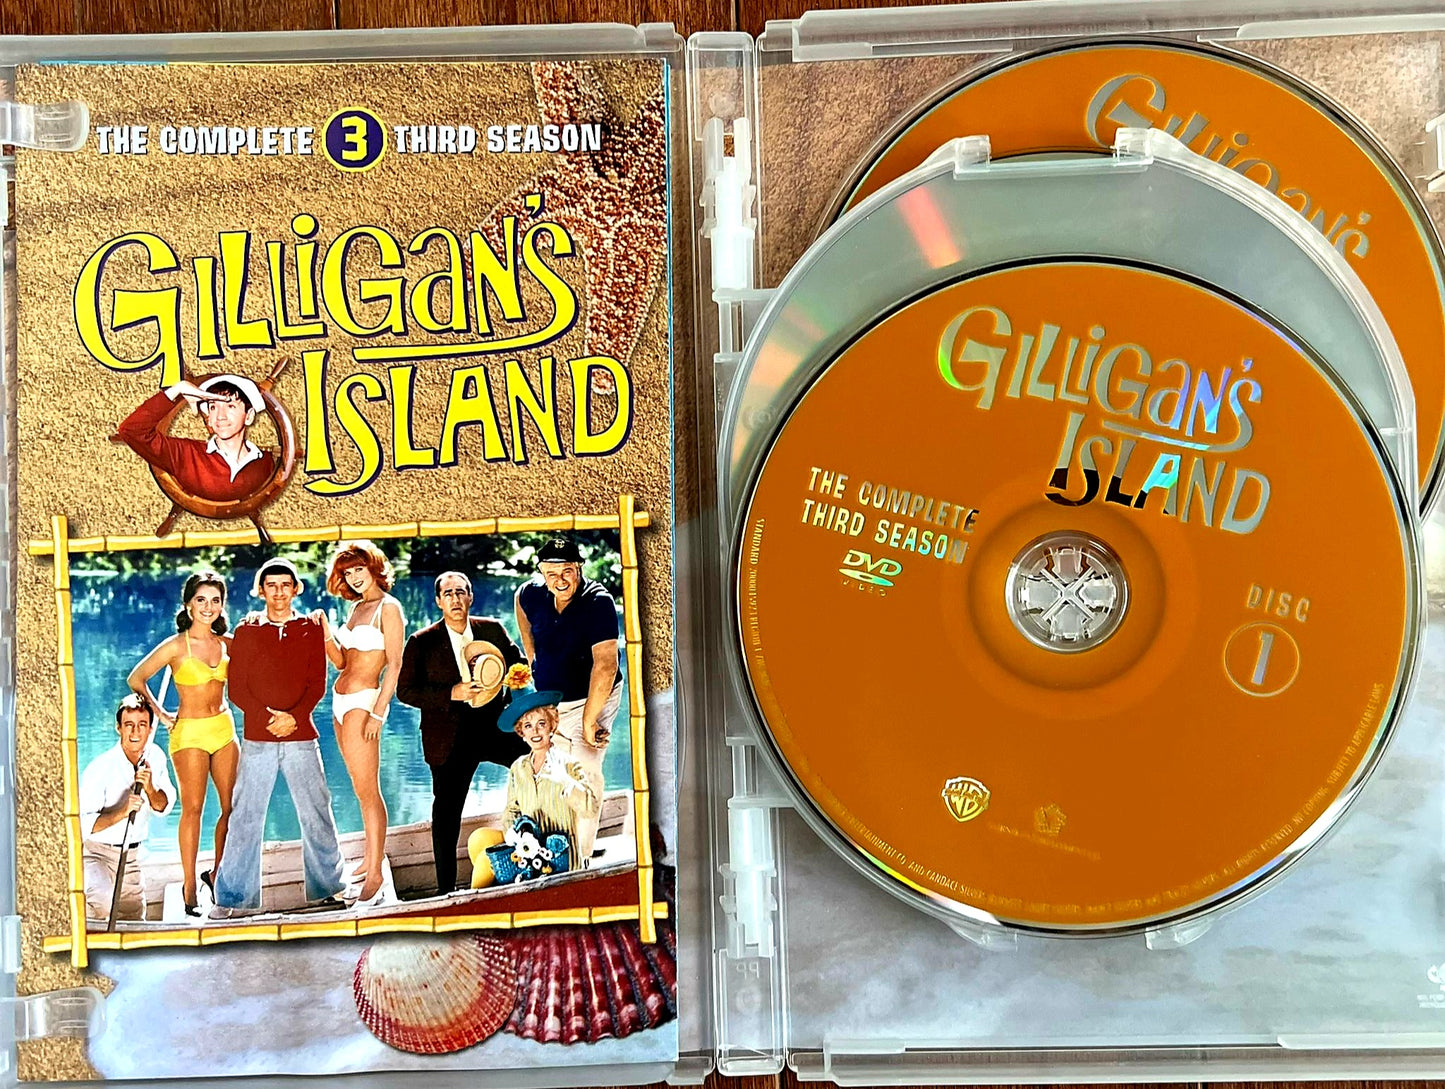 "GILLIGAN'S ISLAND" *The Complete 3rd Season on DVD